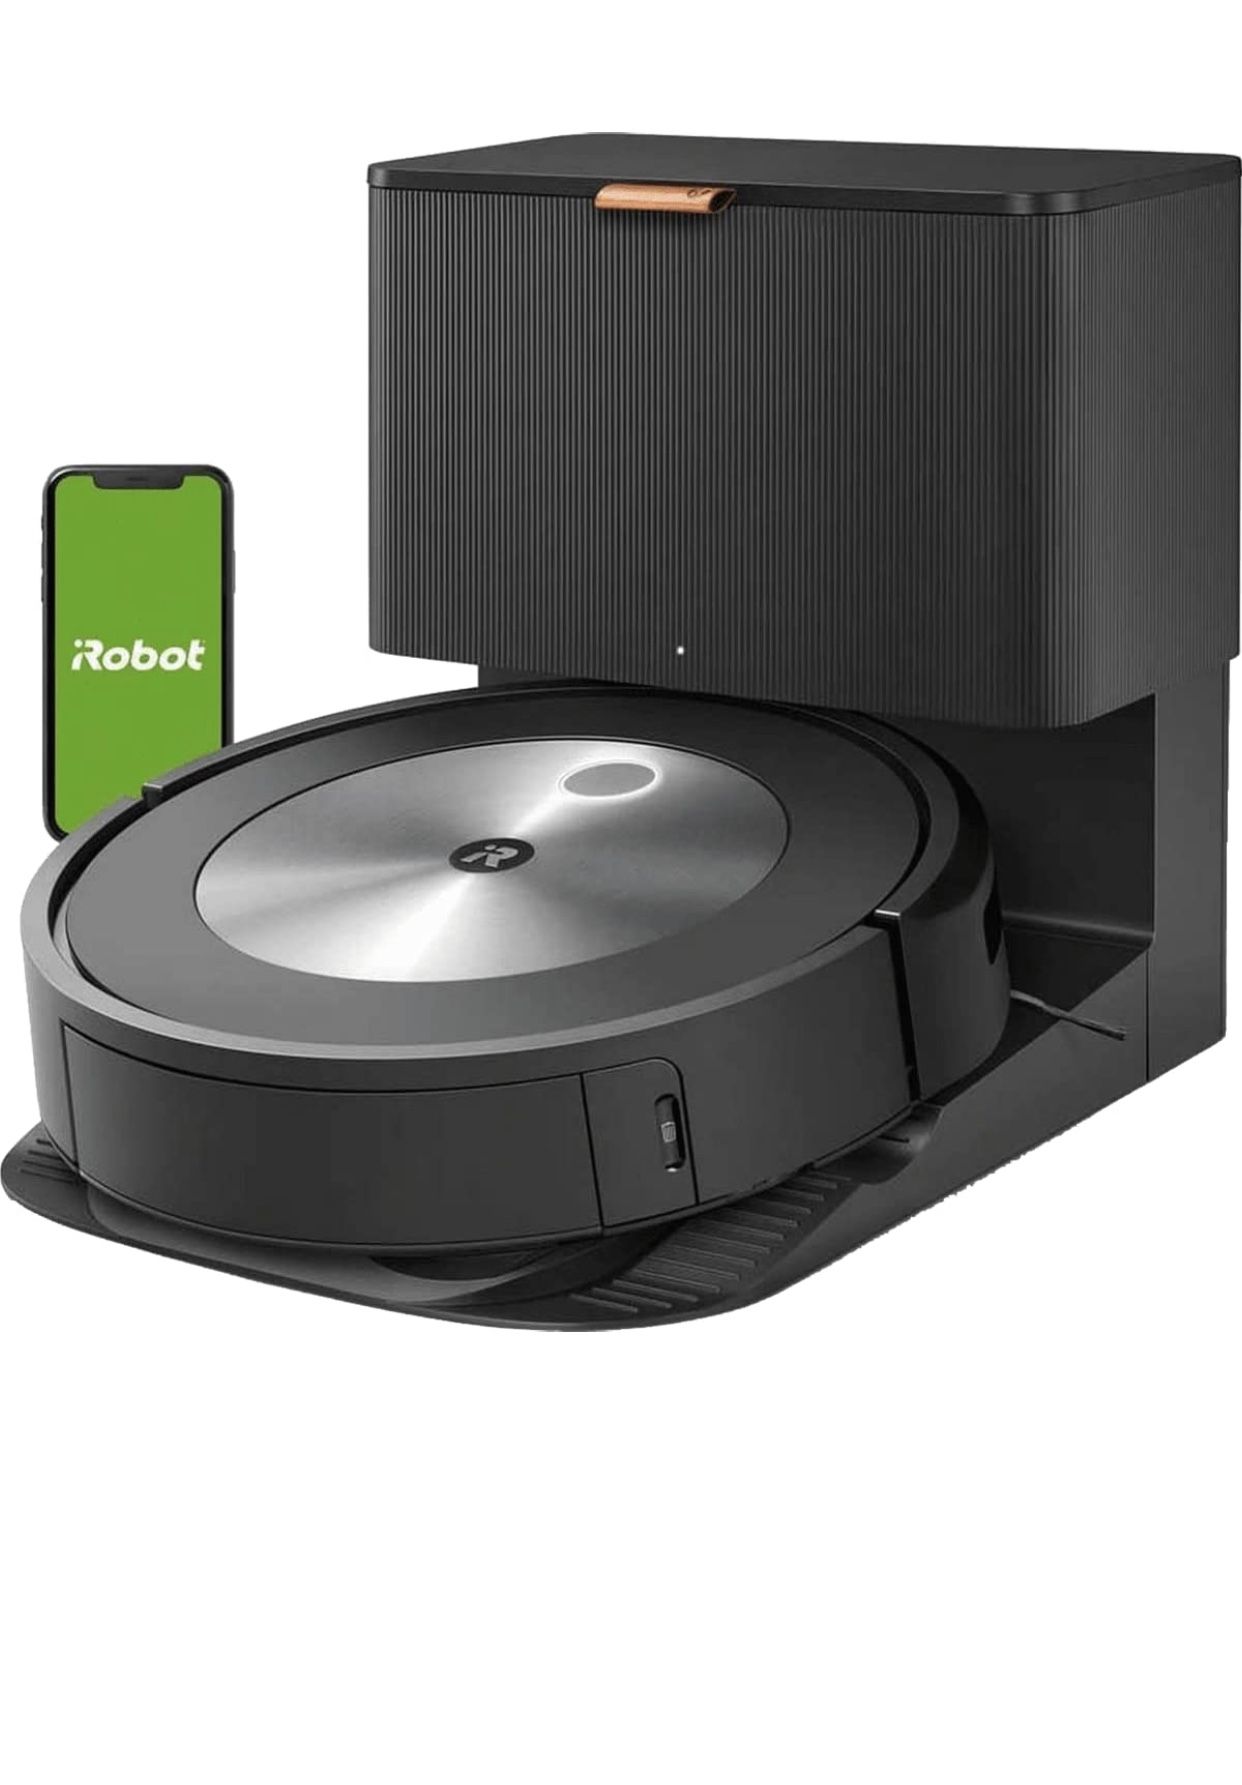 New Roomba j7+ (7550) Self-Emptying Robot Vacuum BRAND NEW (Never Used)